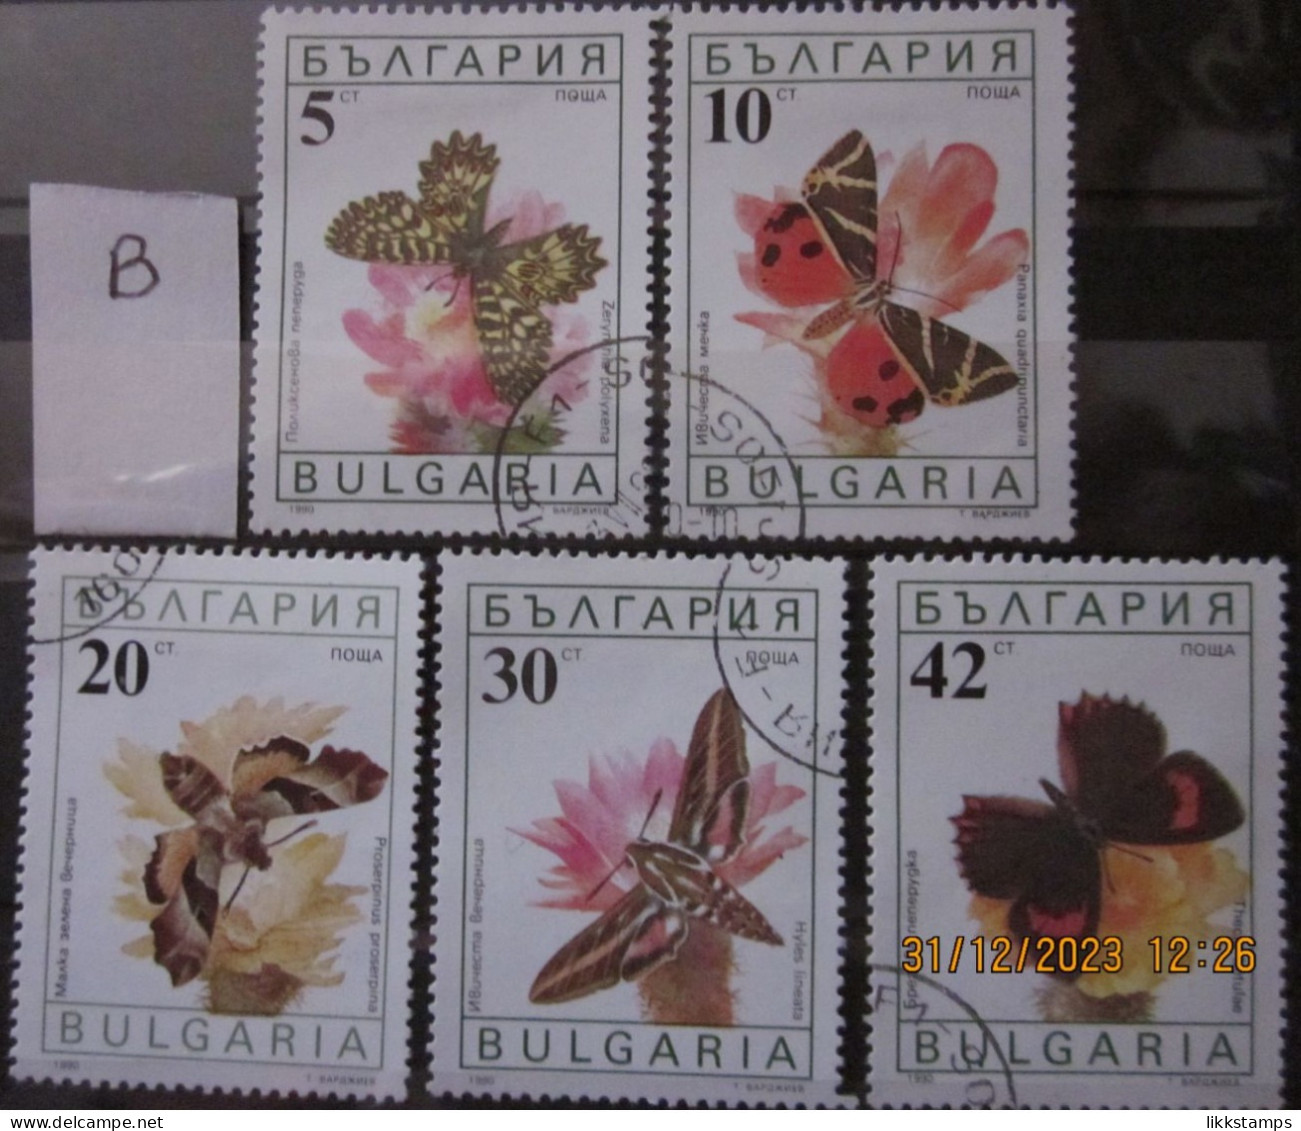 BULGARIA 1990 ~ S.G. 3699 - 3703, ~ 'LOT B' ~ BUTTERFLIES AND MOTHS. ~  VFU #02917 - Usati